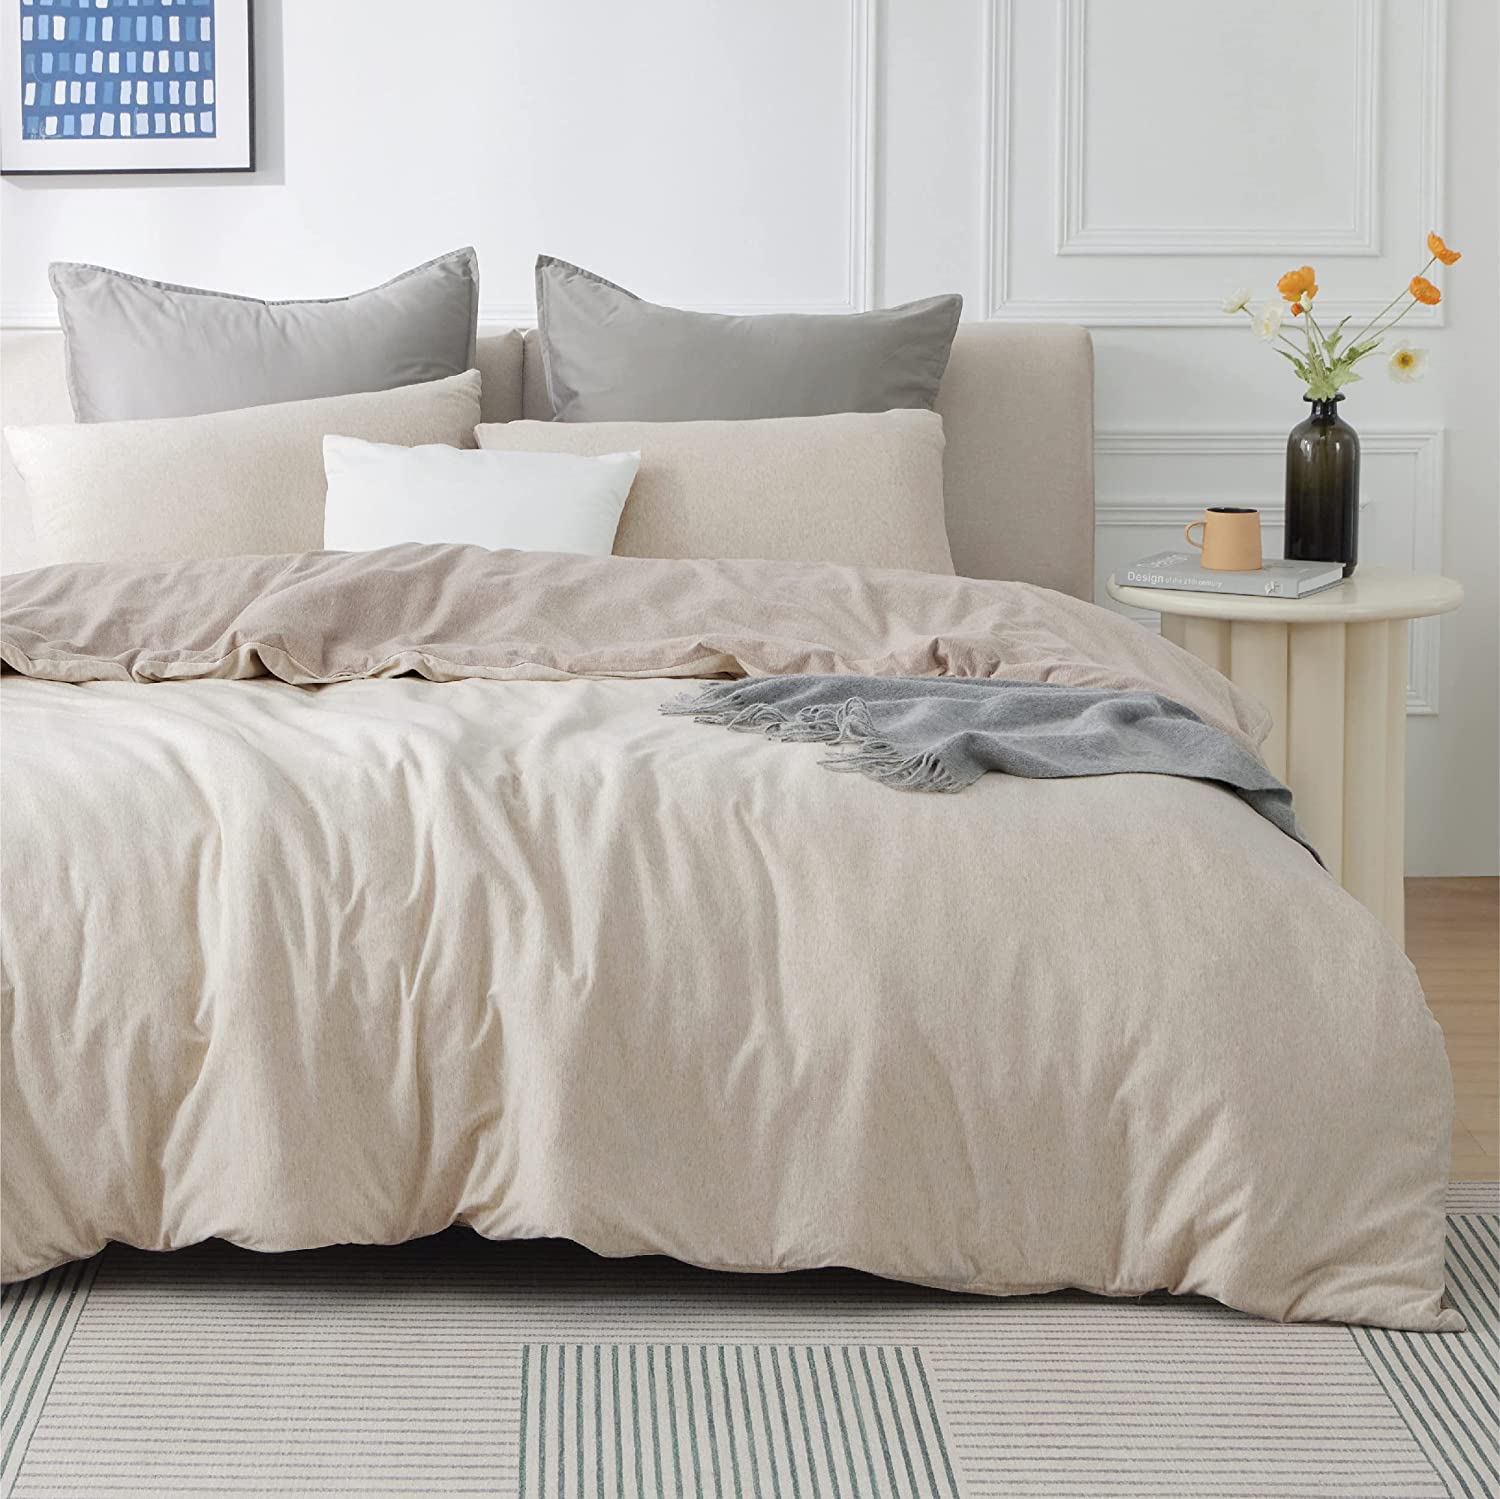 Bedsure Linen Duvet Cover King - Linen Cotton Blend Duvet Cover Set, Linen  Color, 3 Pieces, 1 Duvet Cover 104 x 90 Inches and 2 Pillowcases, Comforter